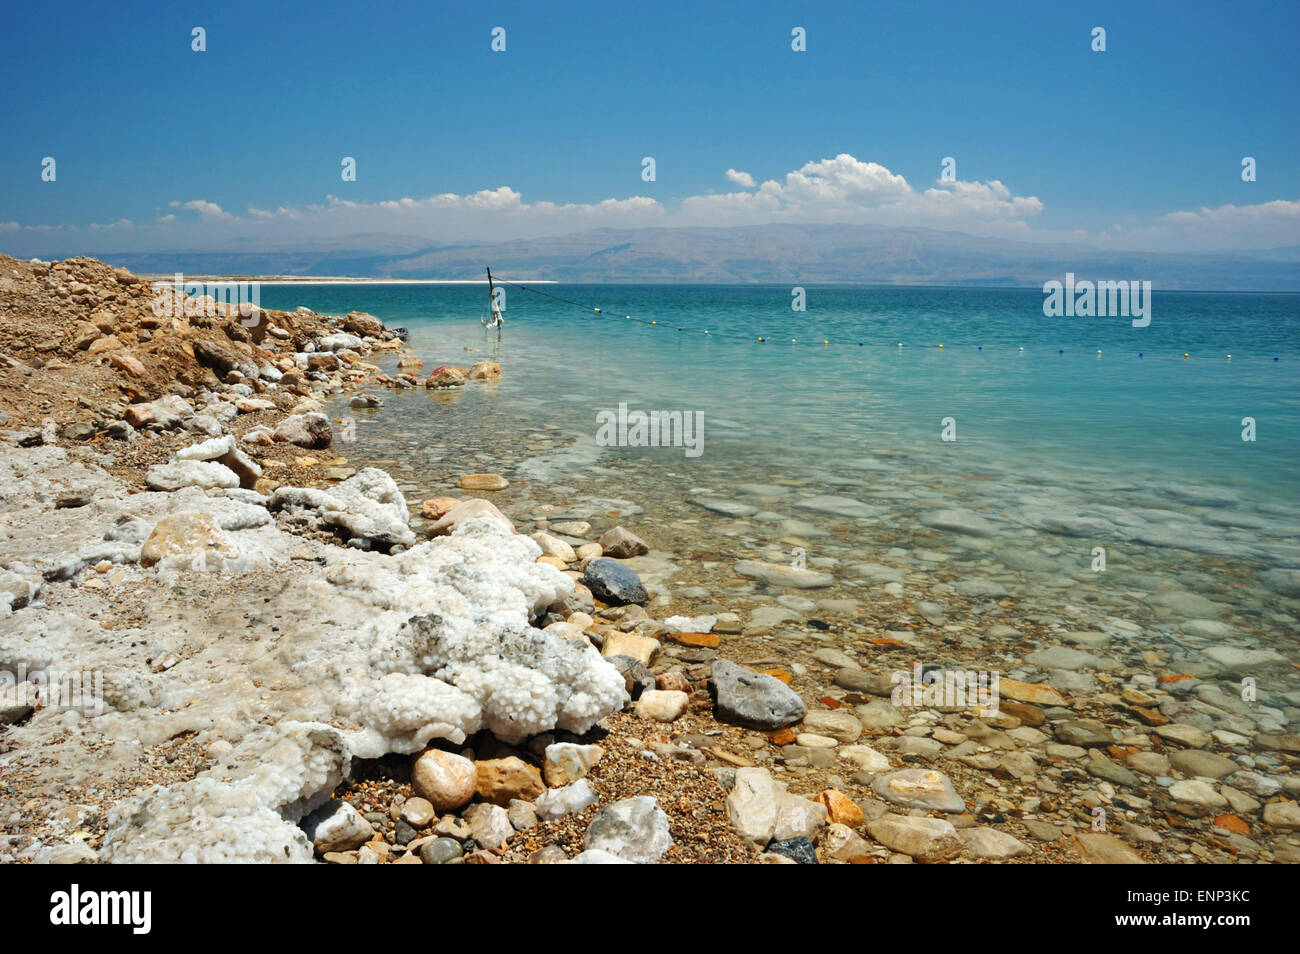 Dead Sea coast, Israel Stock Photo